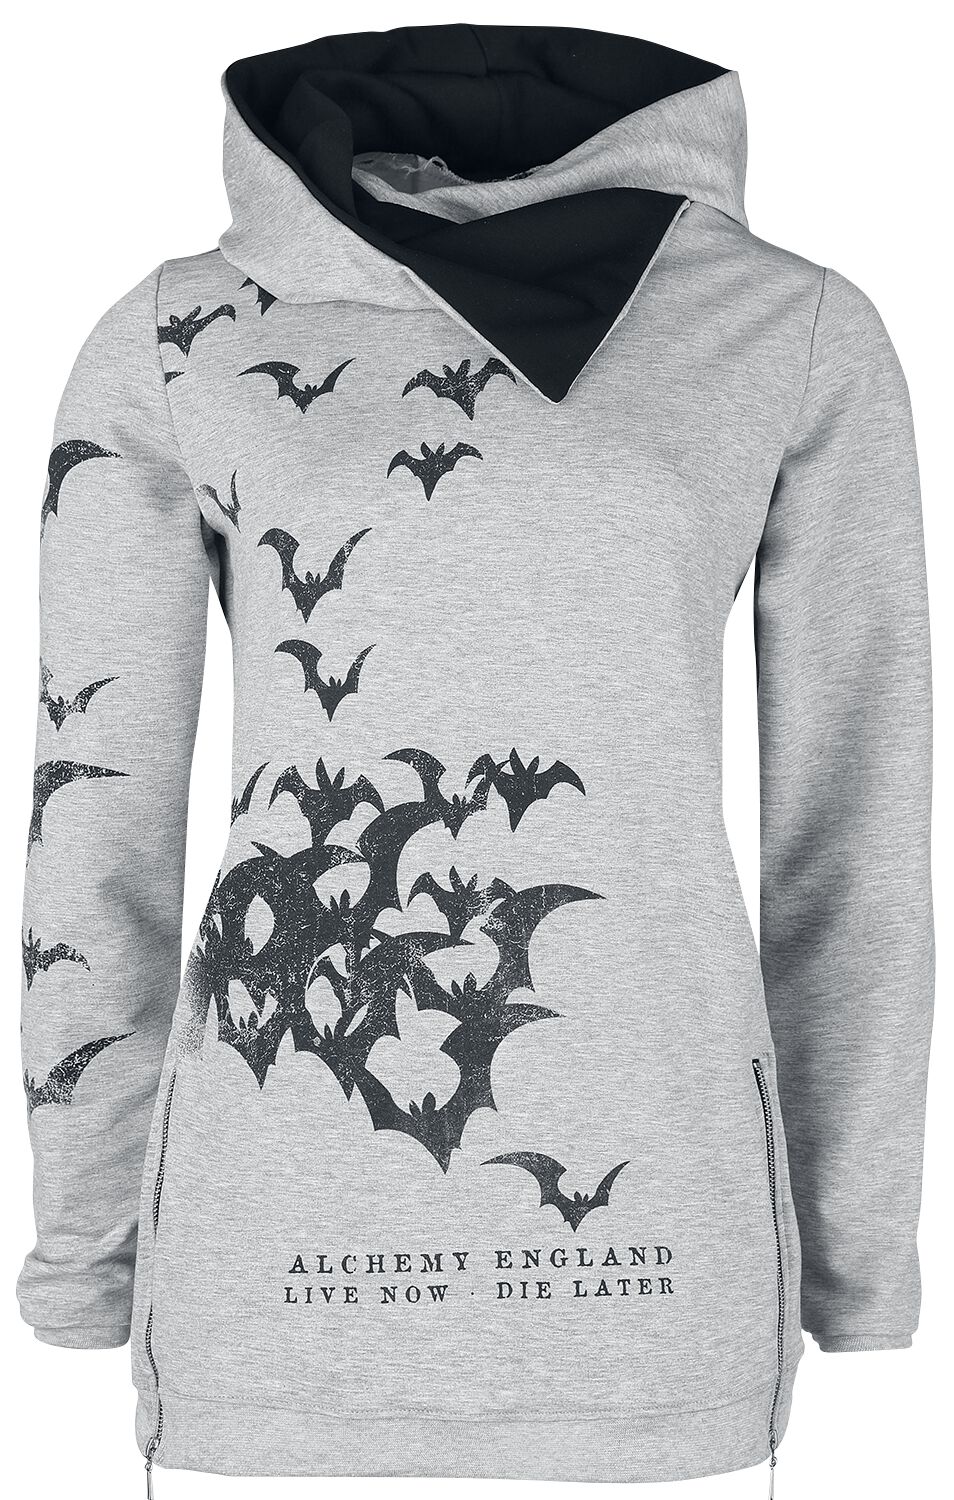 Alchemy England Bats Attack Hooded sweater grey black